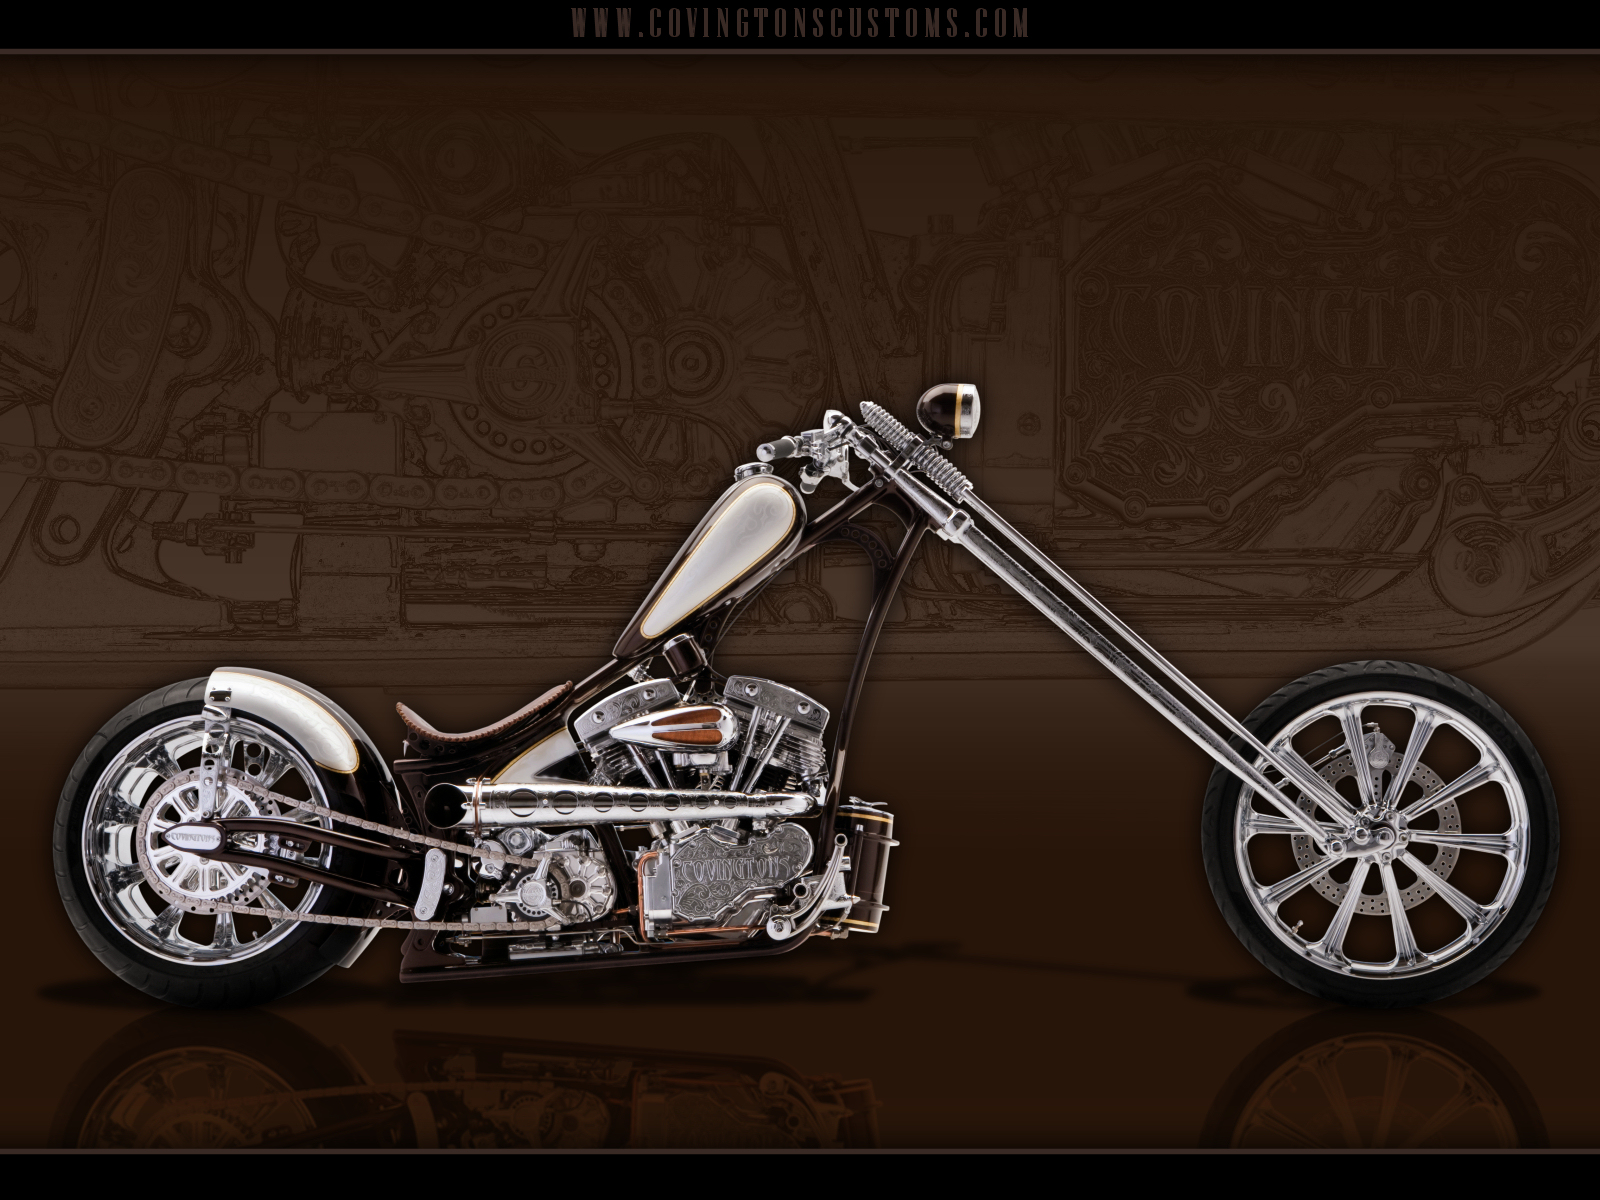 Covingtons Custom Motorcycle Wallpaper Jpg